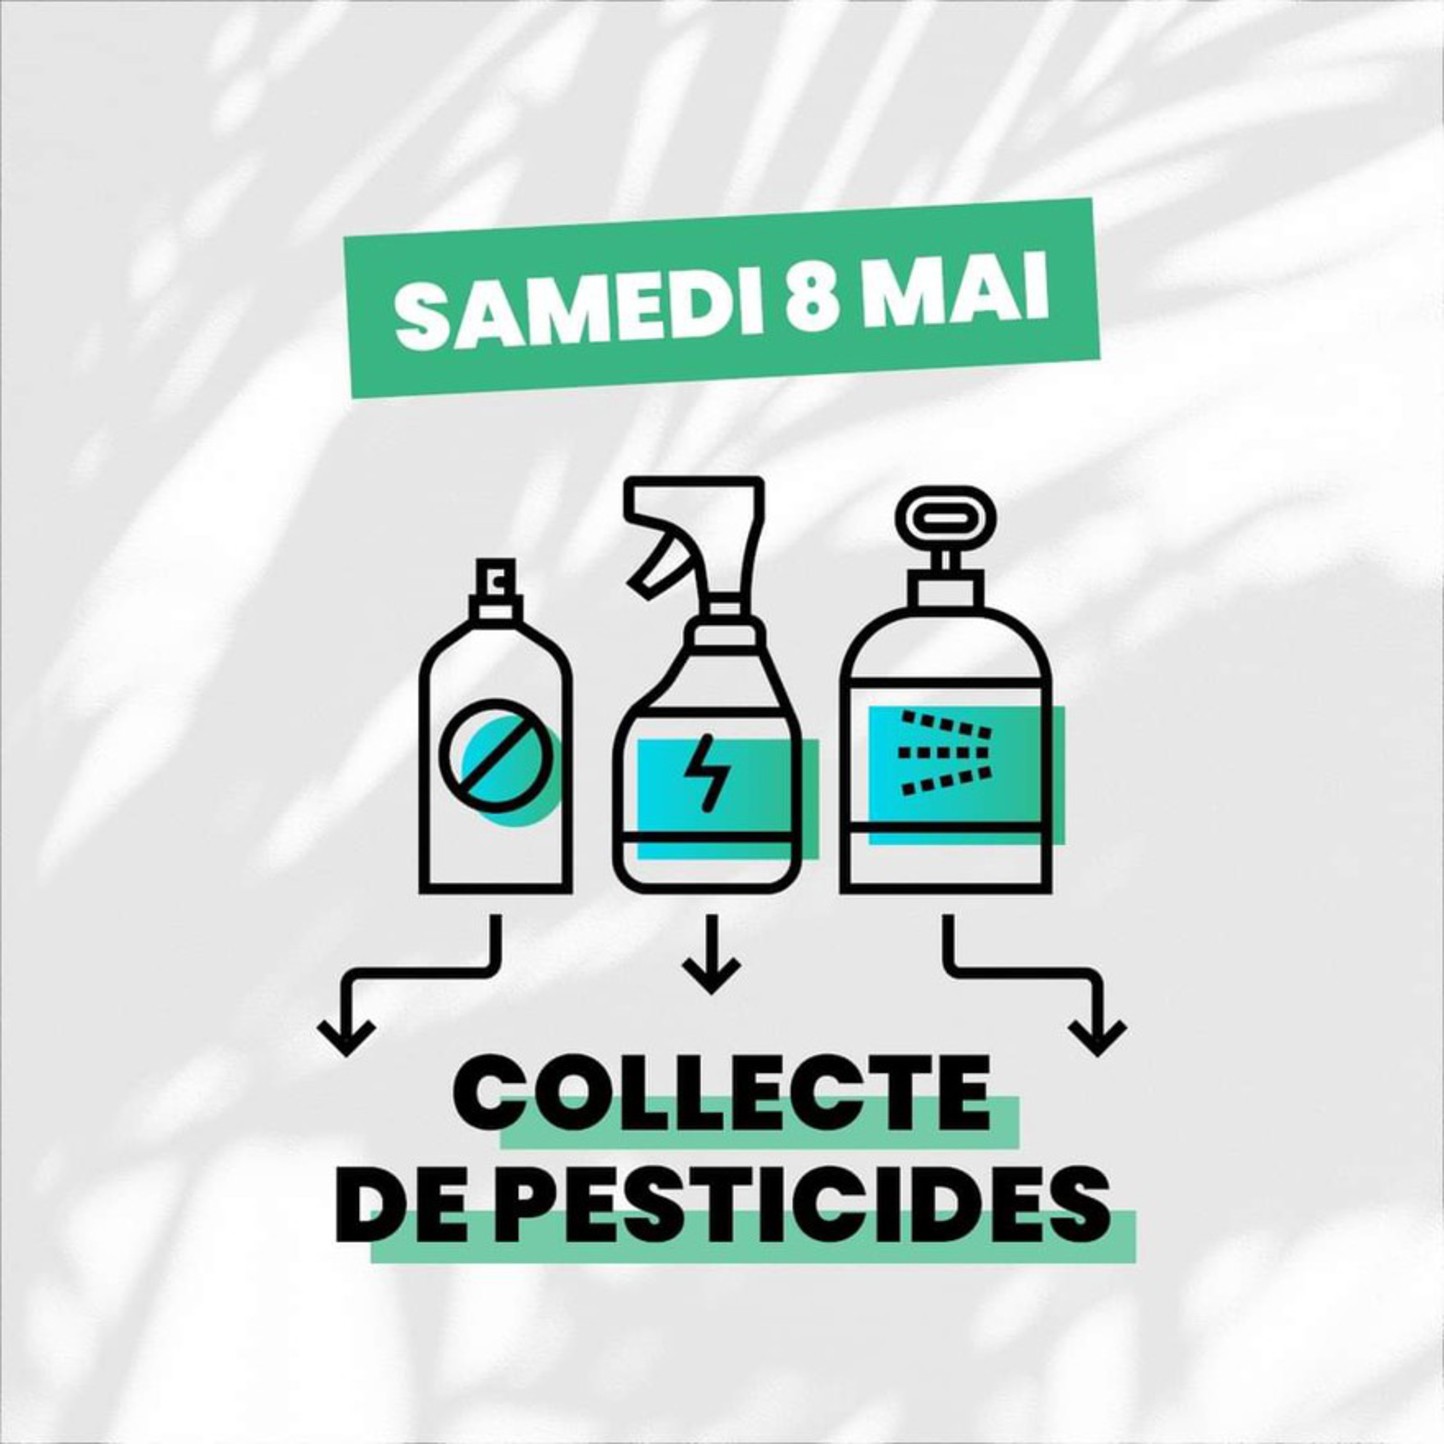 Collecte de pesticides au Tritout le 8 mai